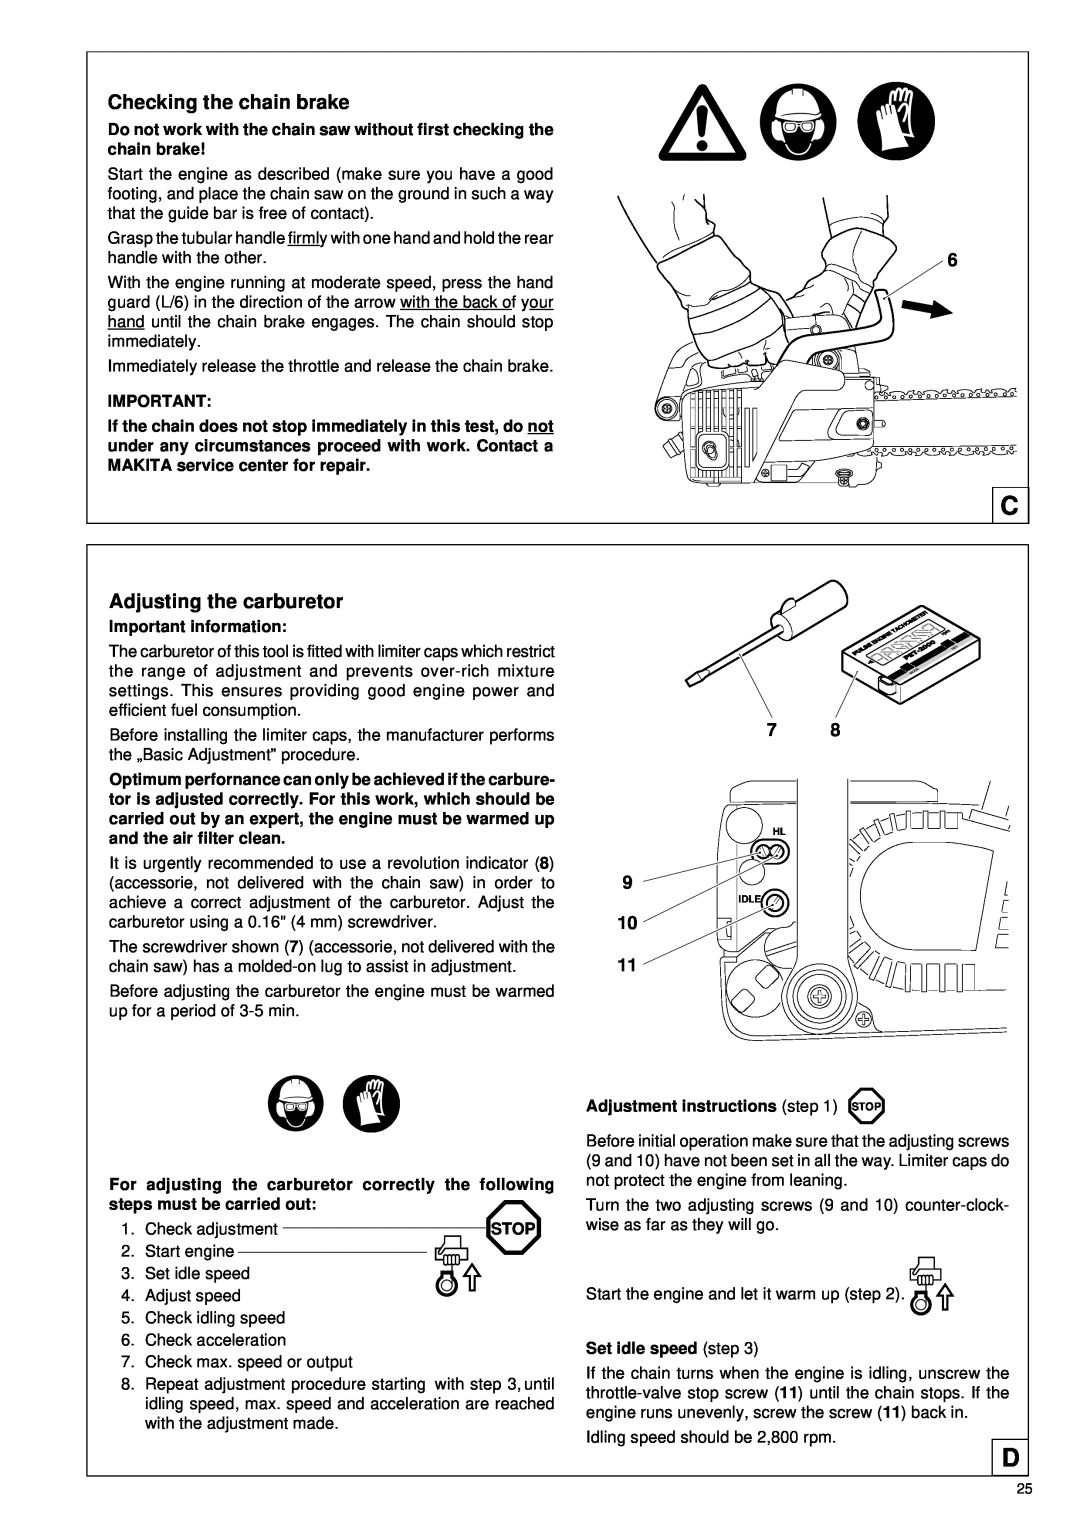 Makita DCS 330 TH instruction manual Checking the chain brake, Adjusting the carburetor 